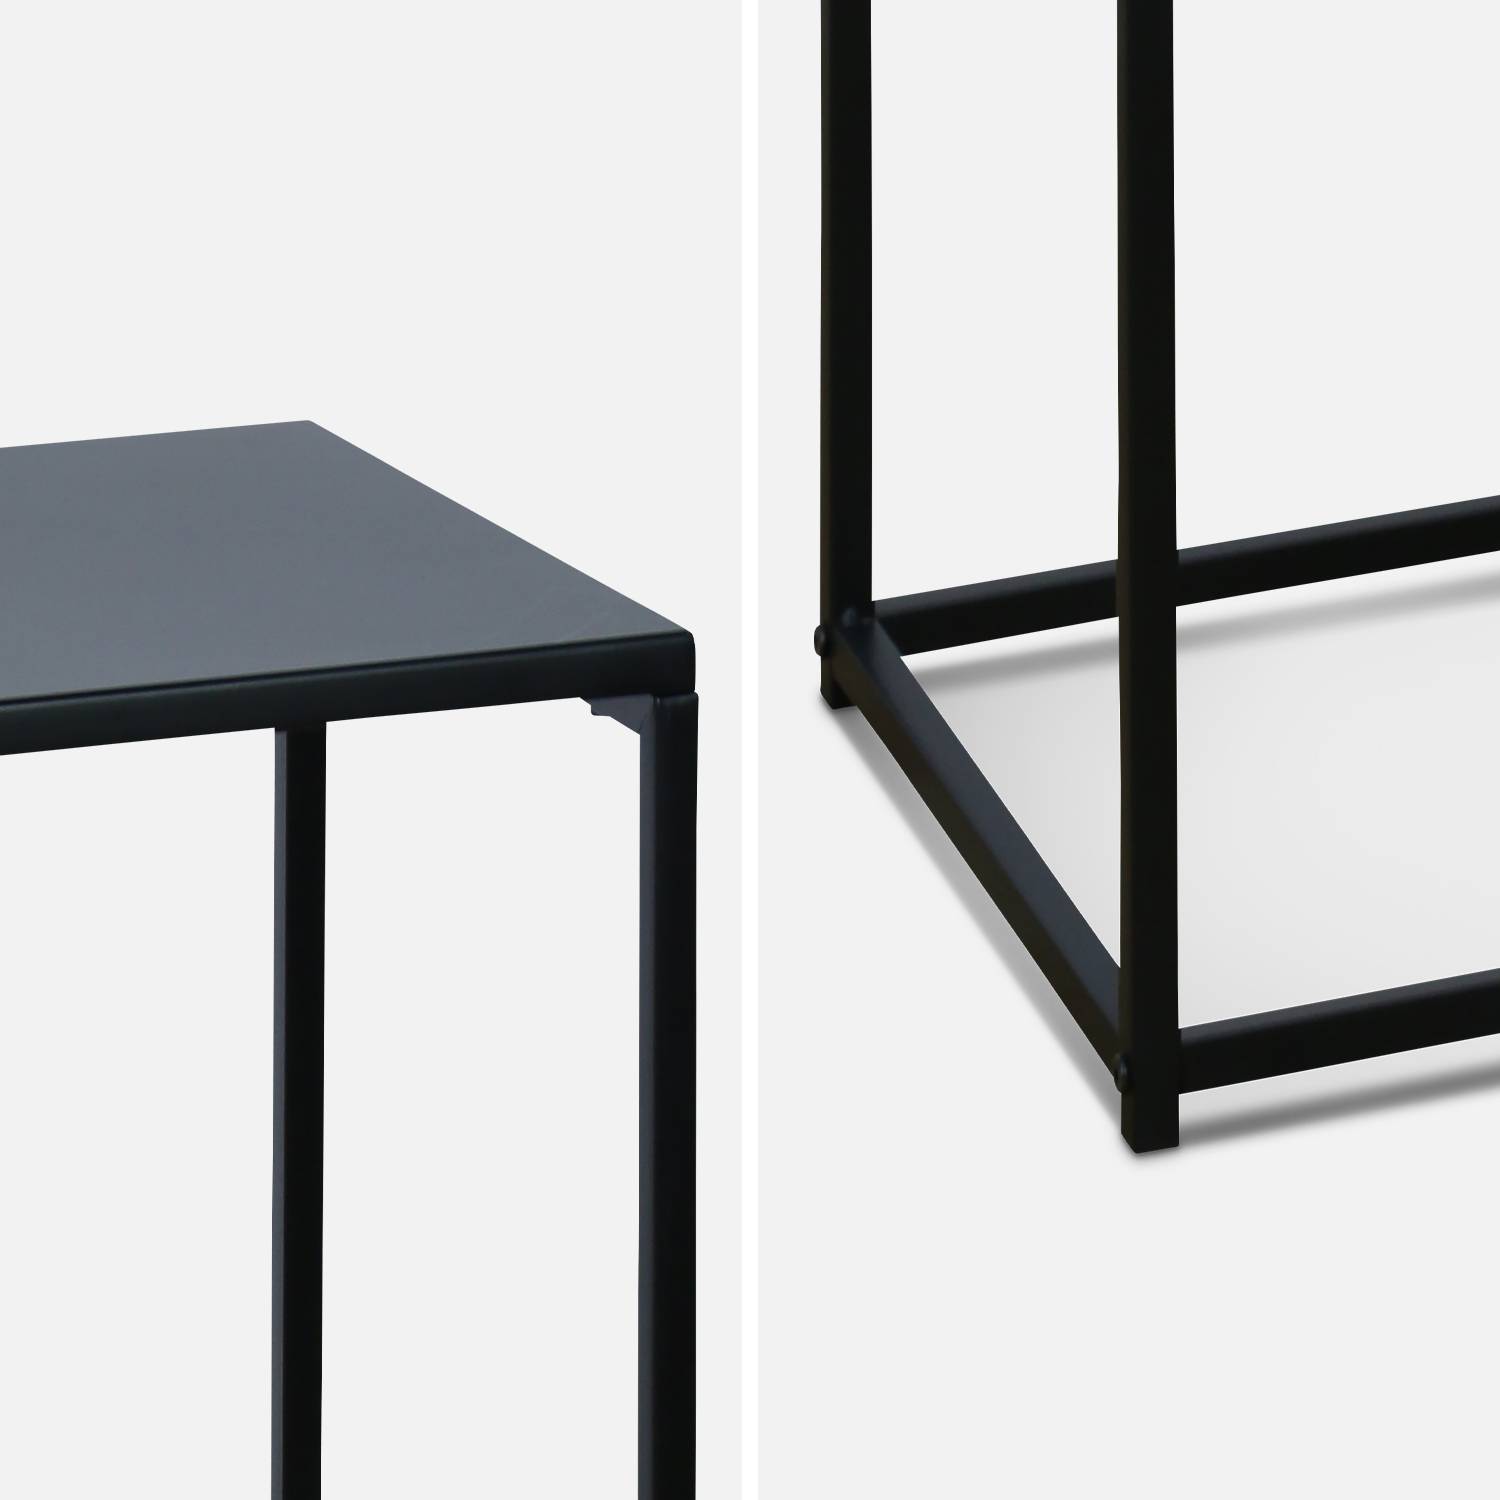 Set of 2 black nesting side tables - Industrial - sofa ends 34x34x74cm / 30x30x54cm Photo8